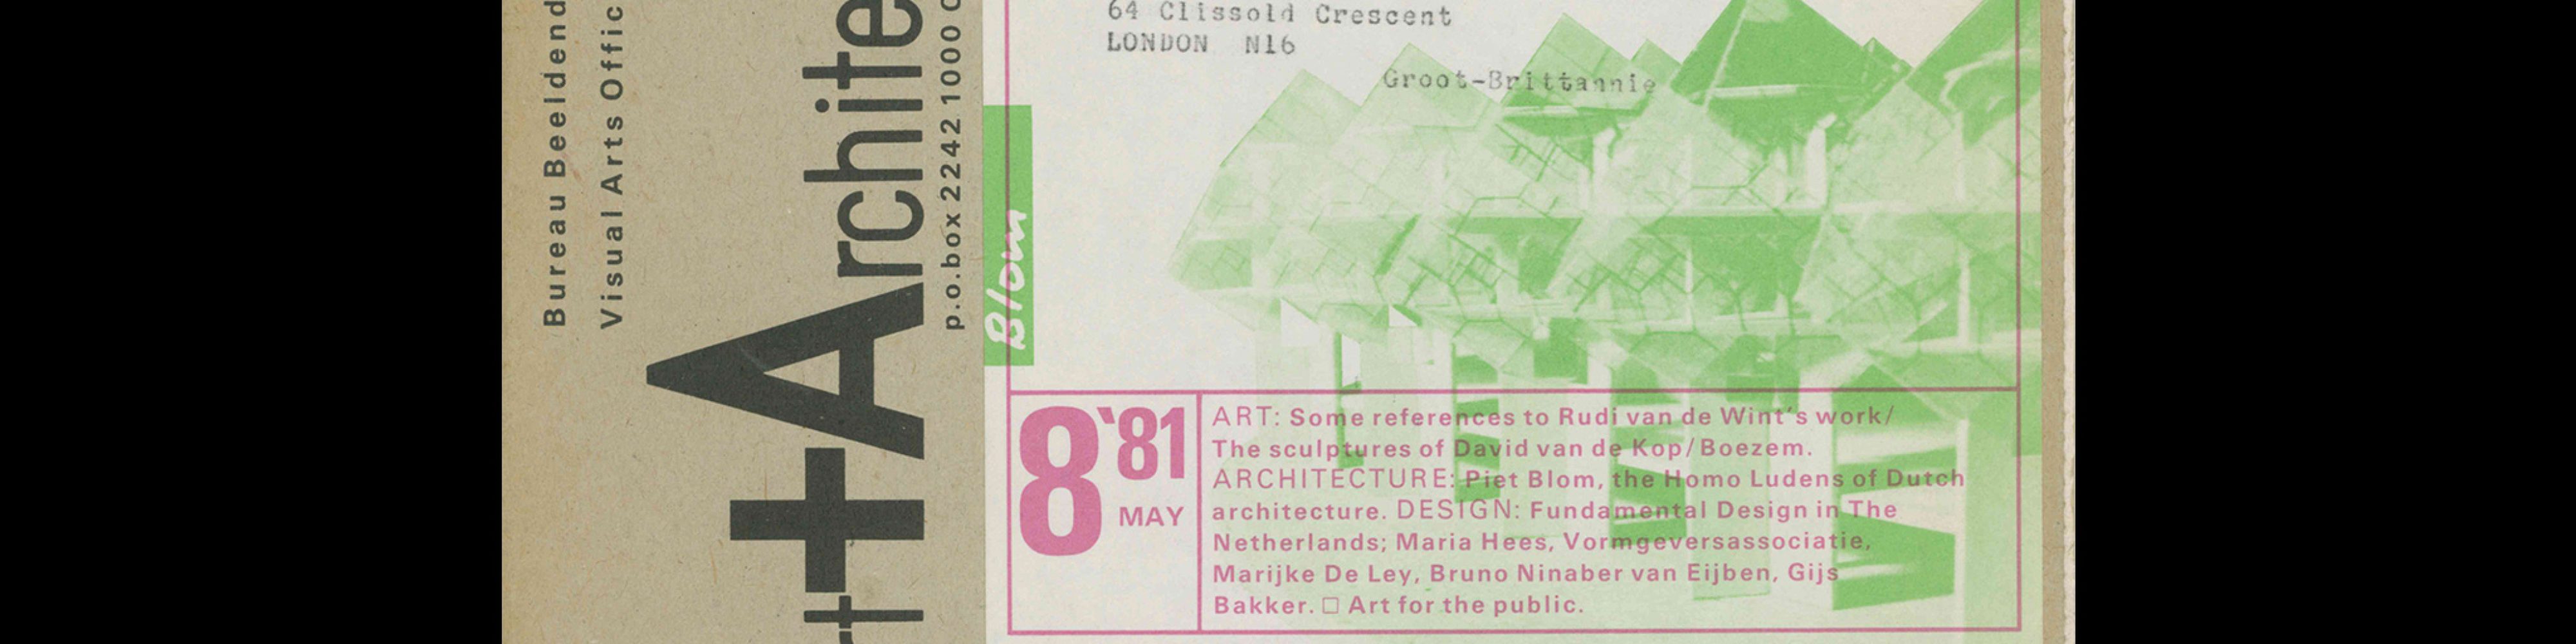 Dutch Art + Architecture Today 08, 1981. Designed by Jan van Toorn